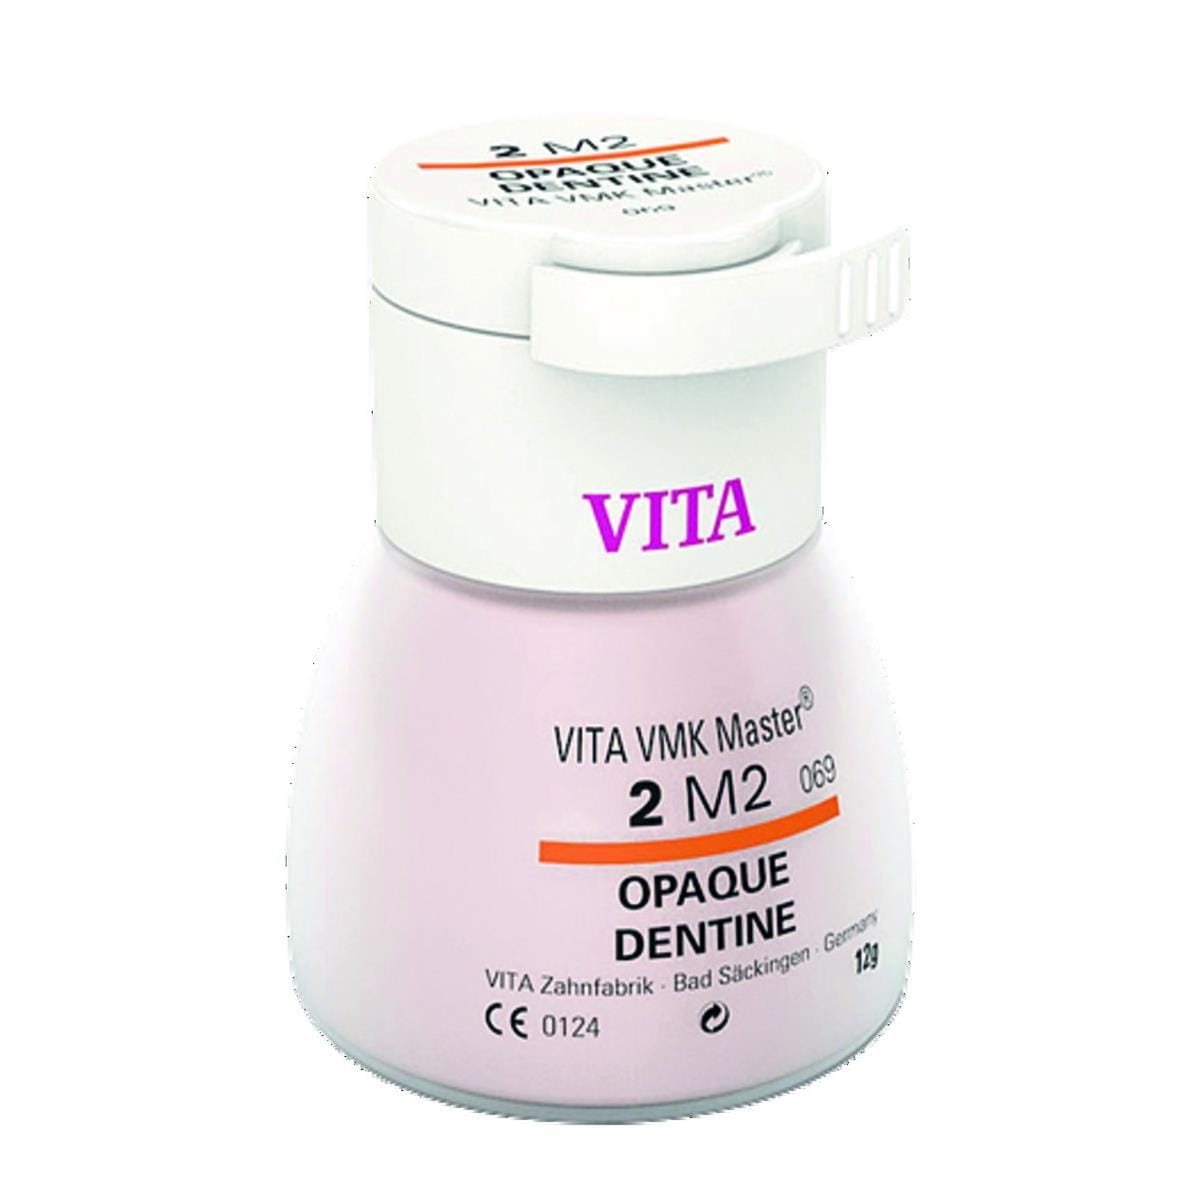 VMK Master VITA - Dentine Opaque - 5M2 - Le flacon de 12 g